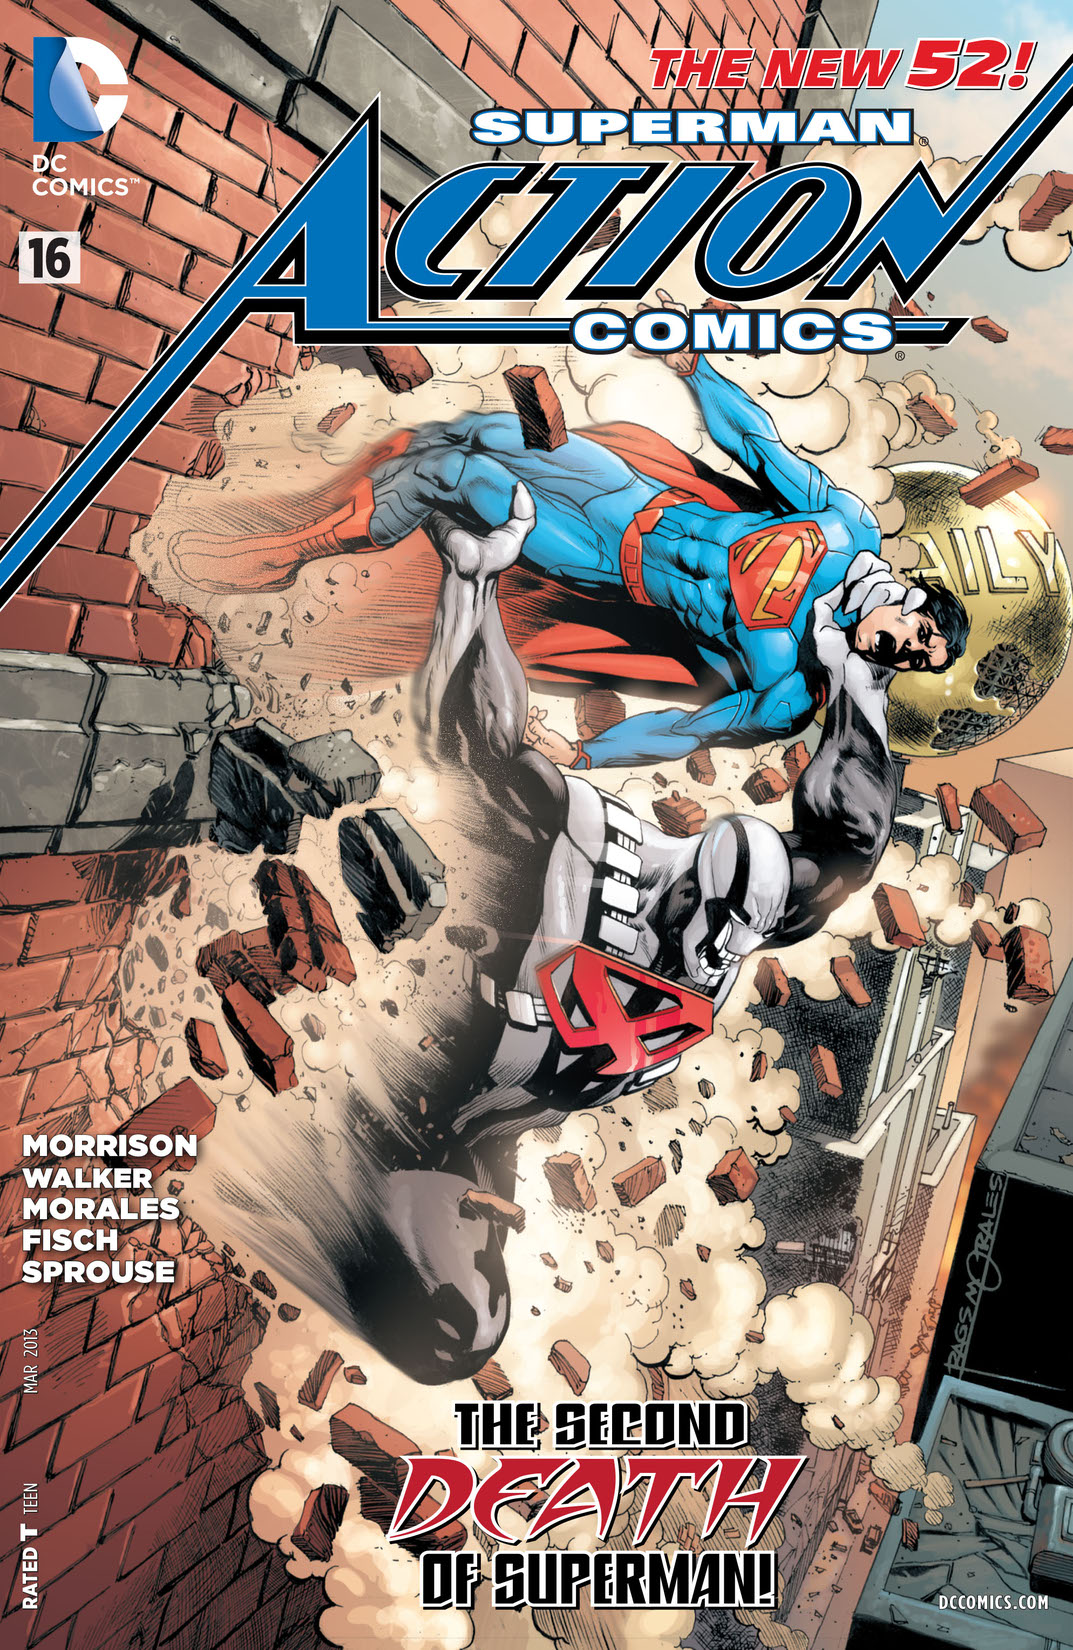 Action Comics (2011-) #16 preview images